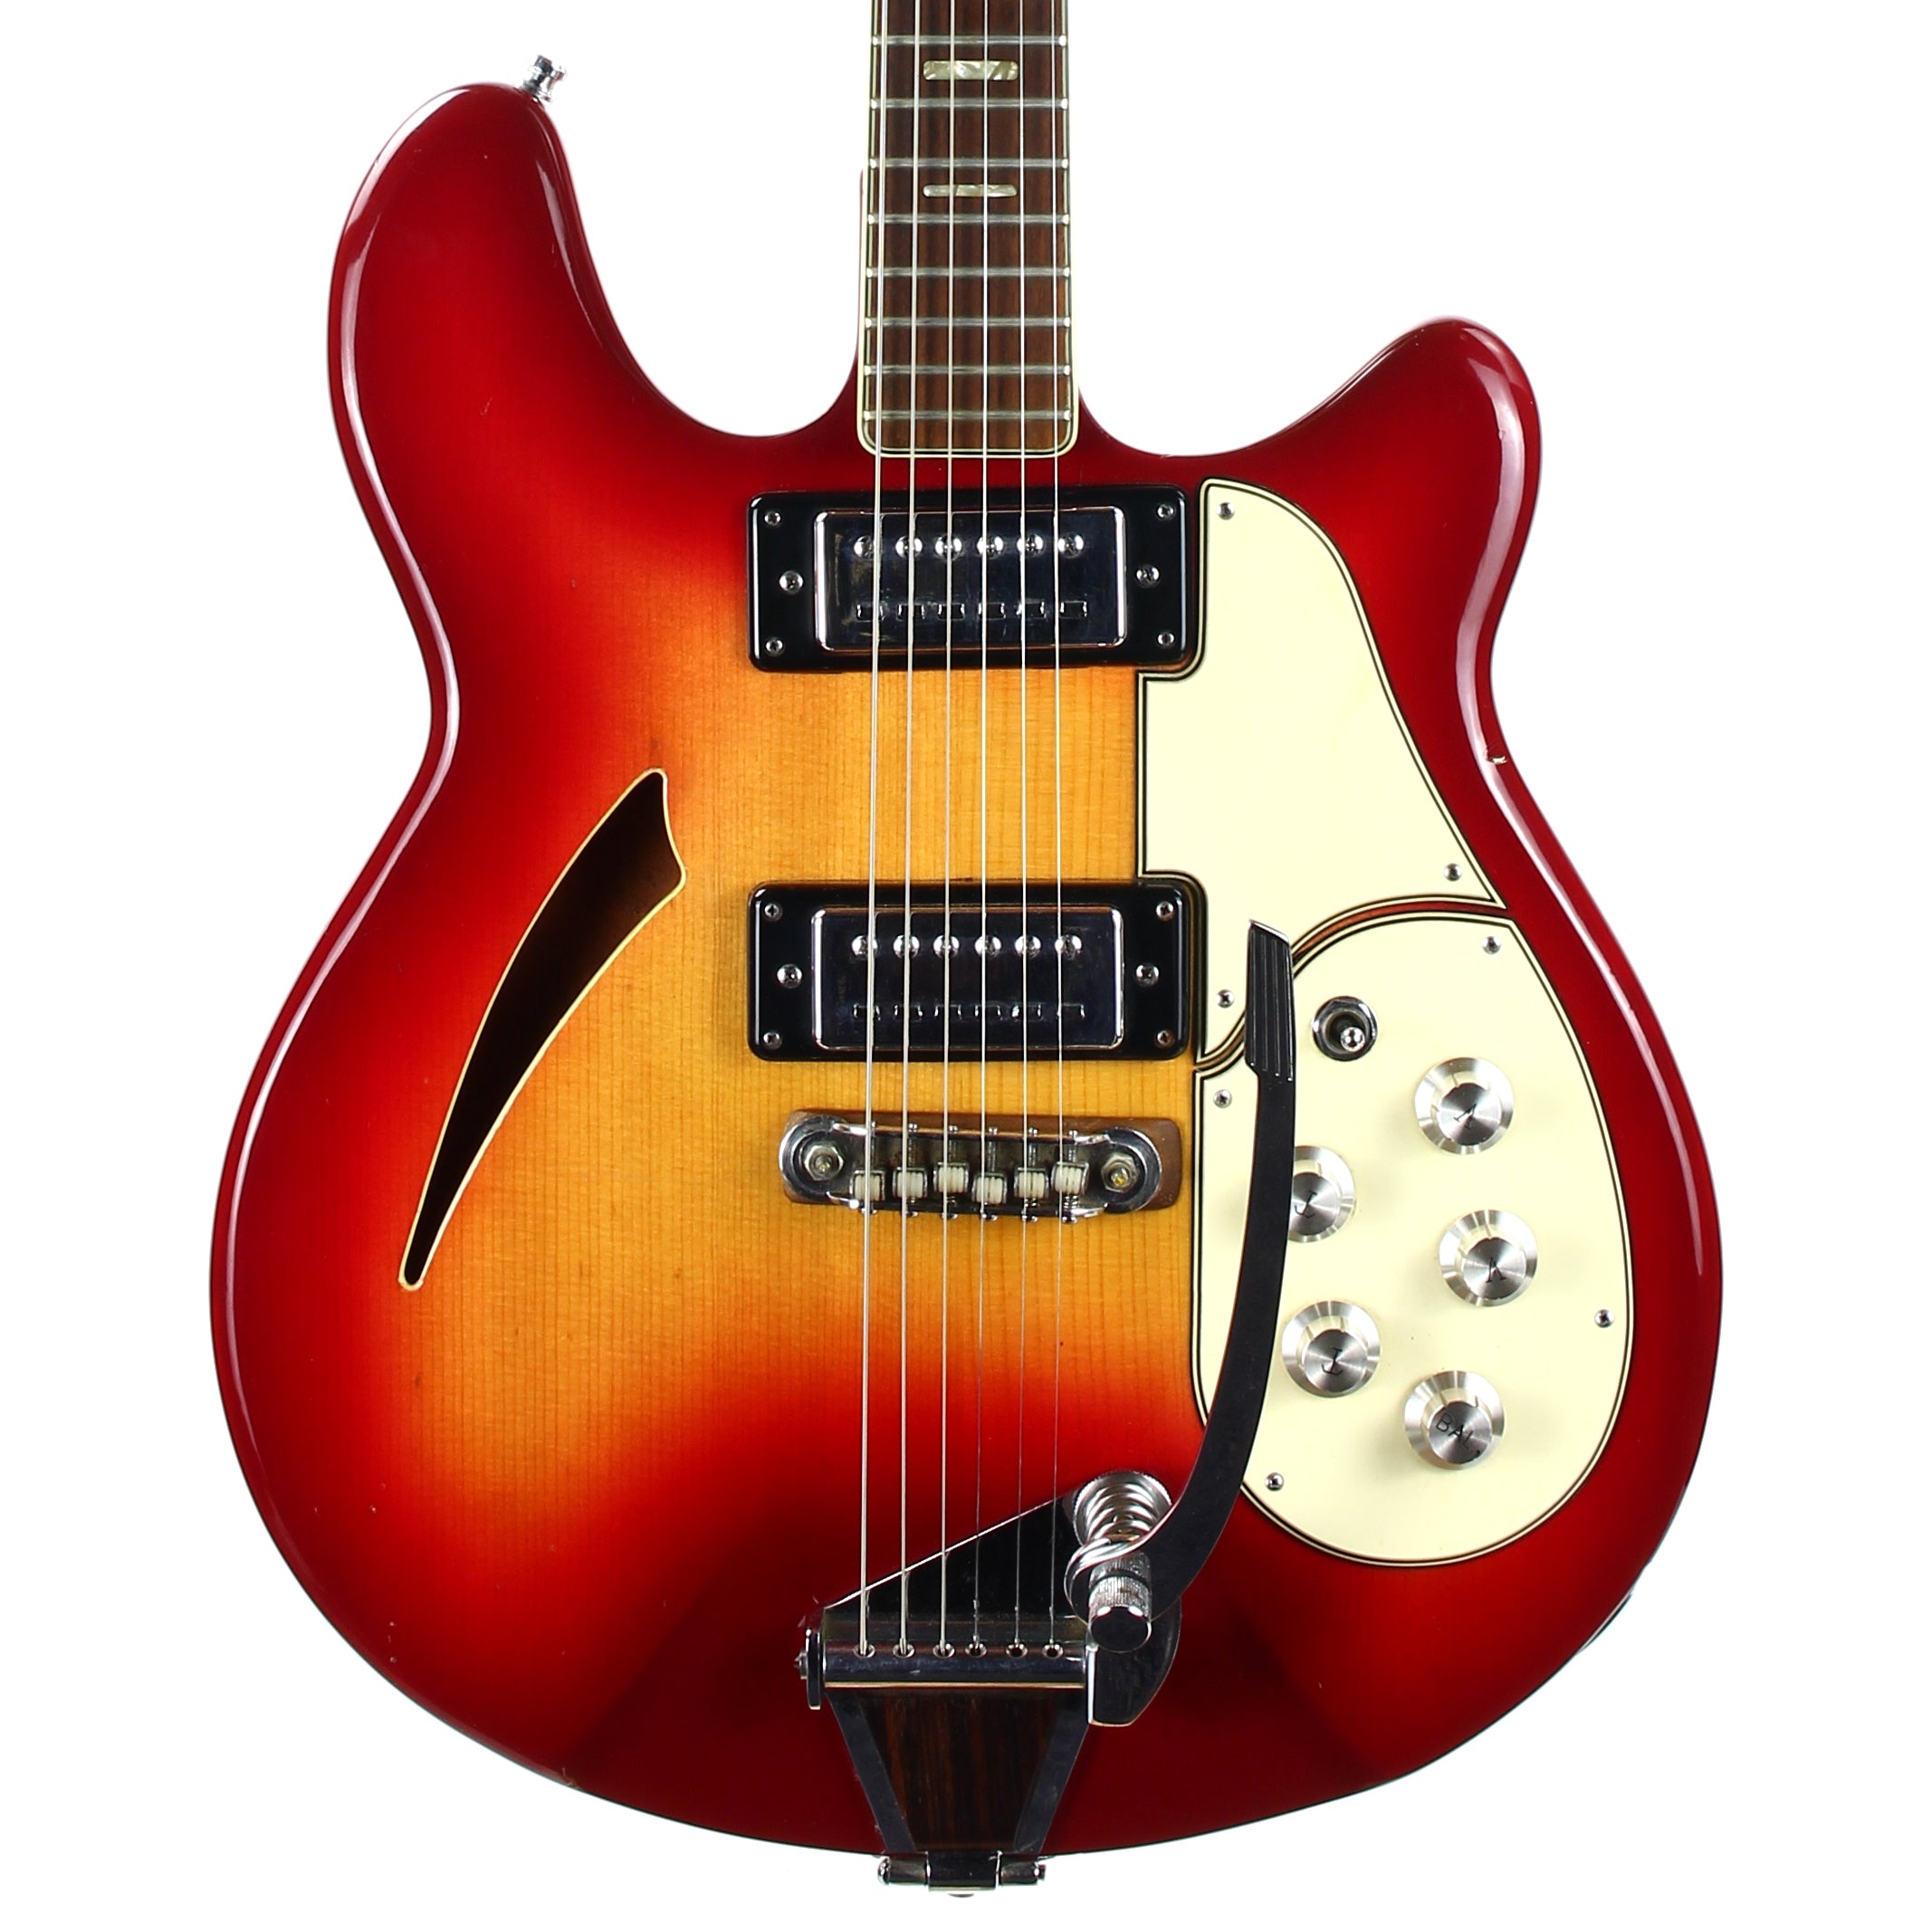 *SOLD*  1967 Apollo 2219 Super Cougar Semi Hollow Electric Guitar w Tremolo - Matsumoku MIJ Japan Rare